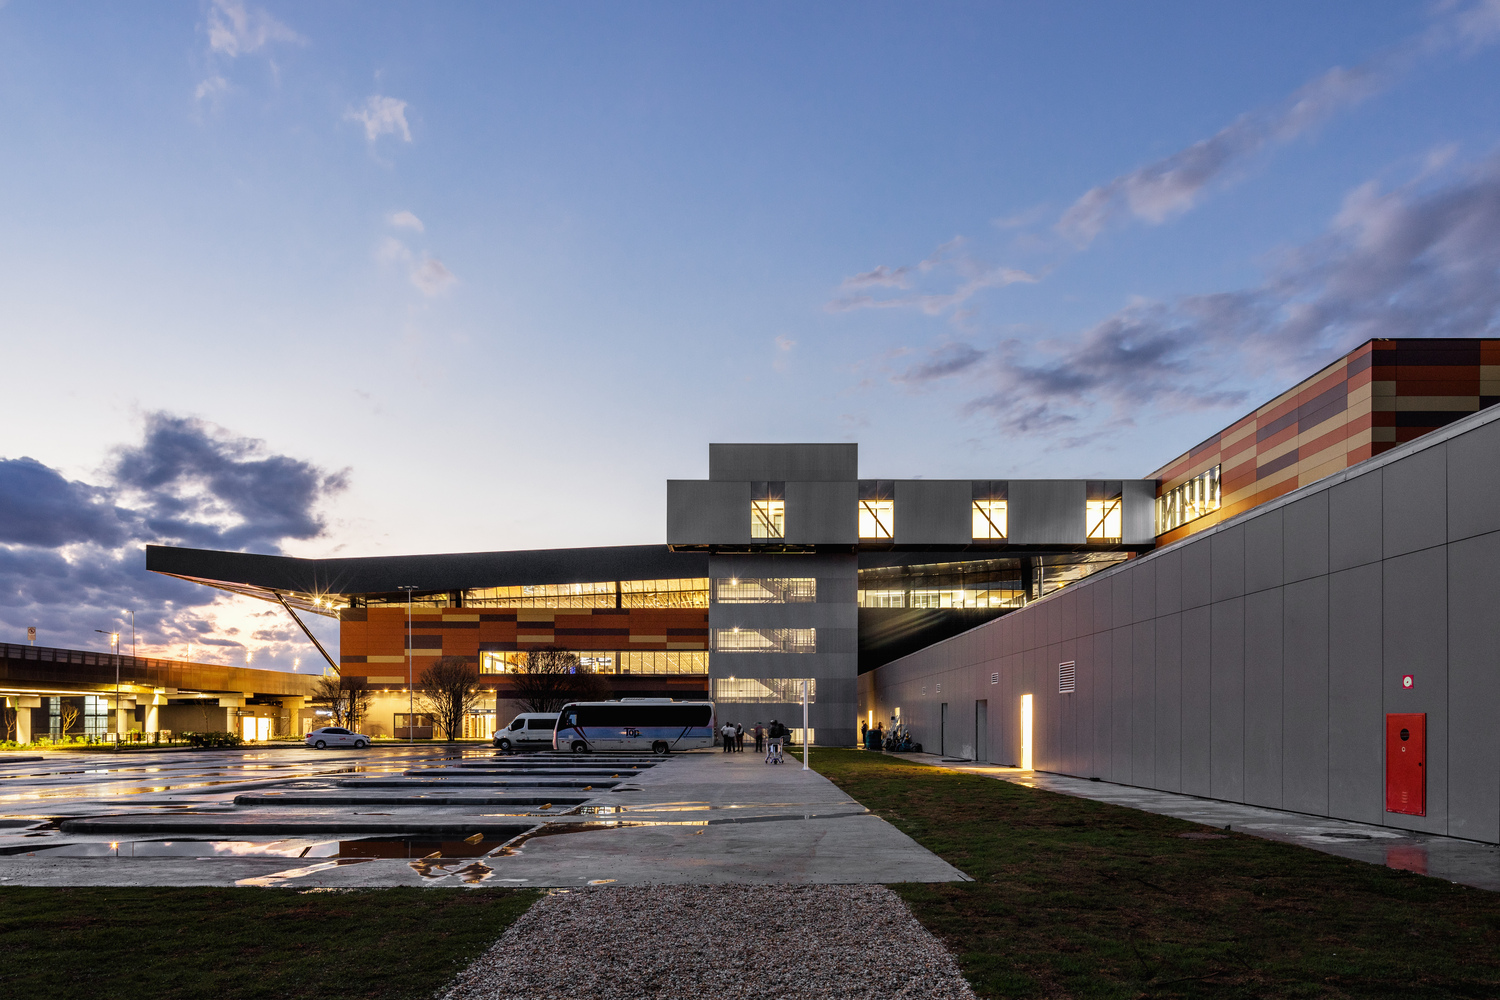  novo terminal do aeroporto de florianópolis - estacionamento